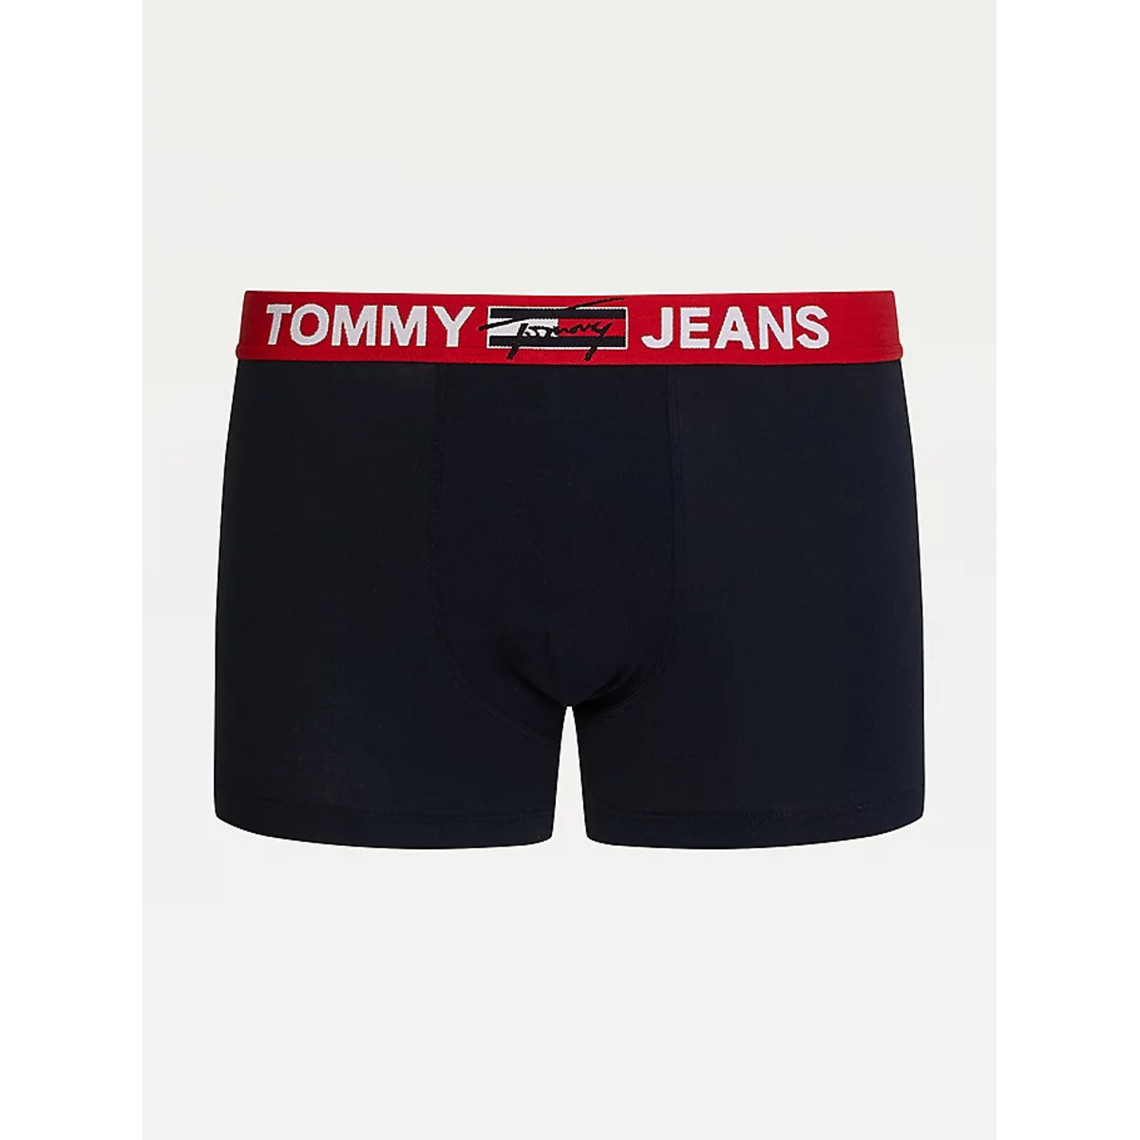 Boxer - Noir Tommy Hilfiger Underwear en coton bio